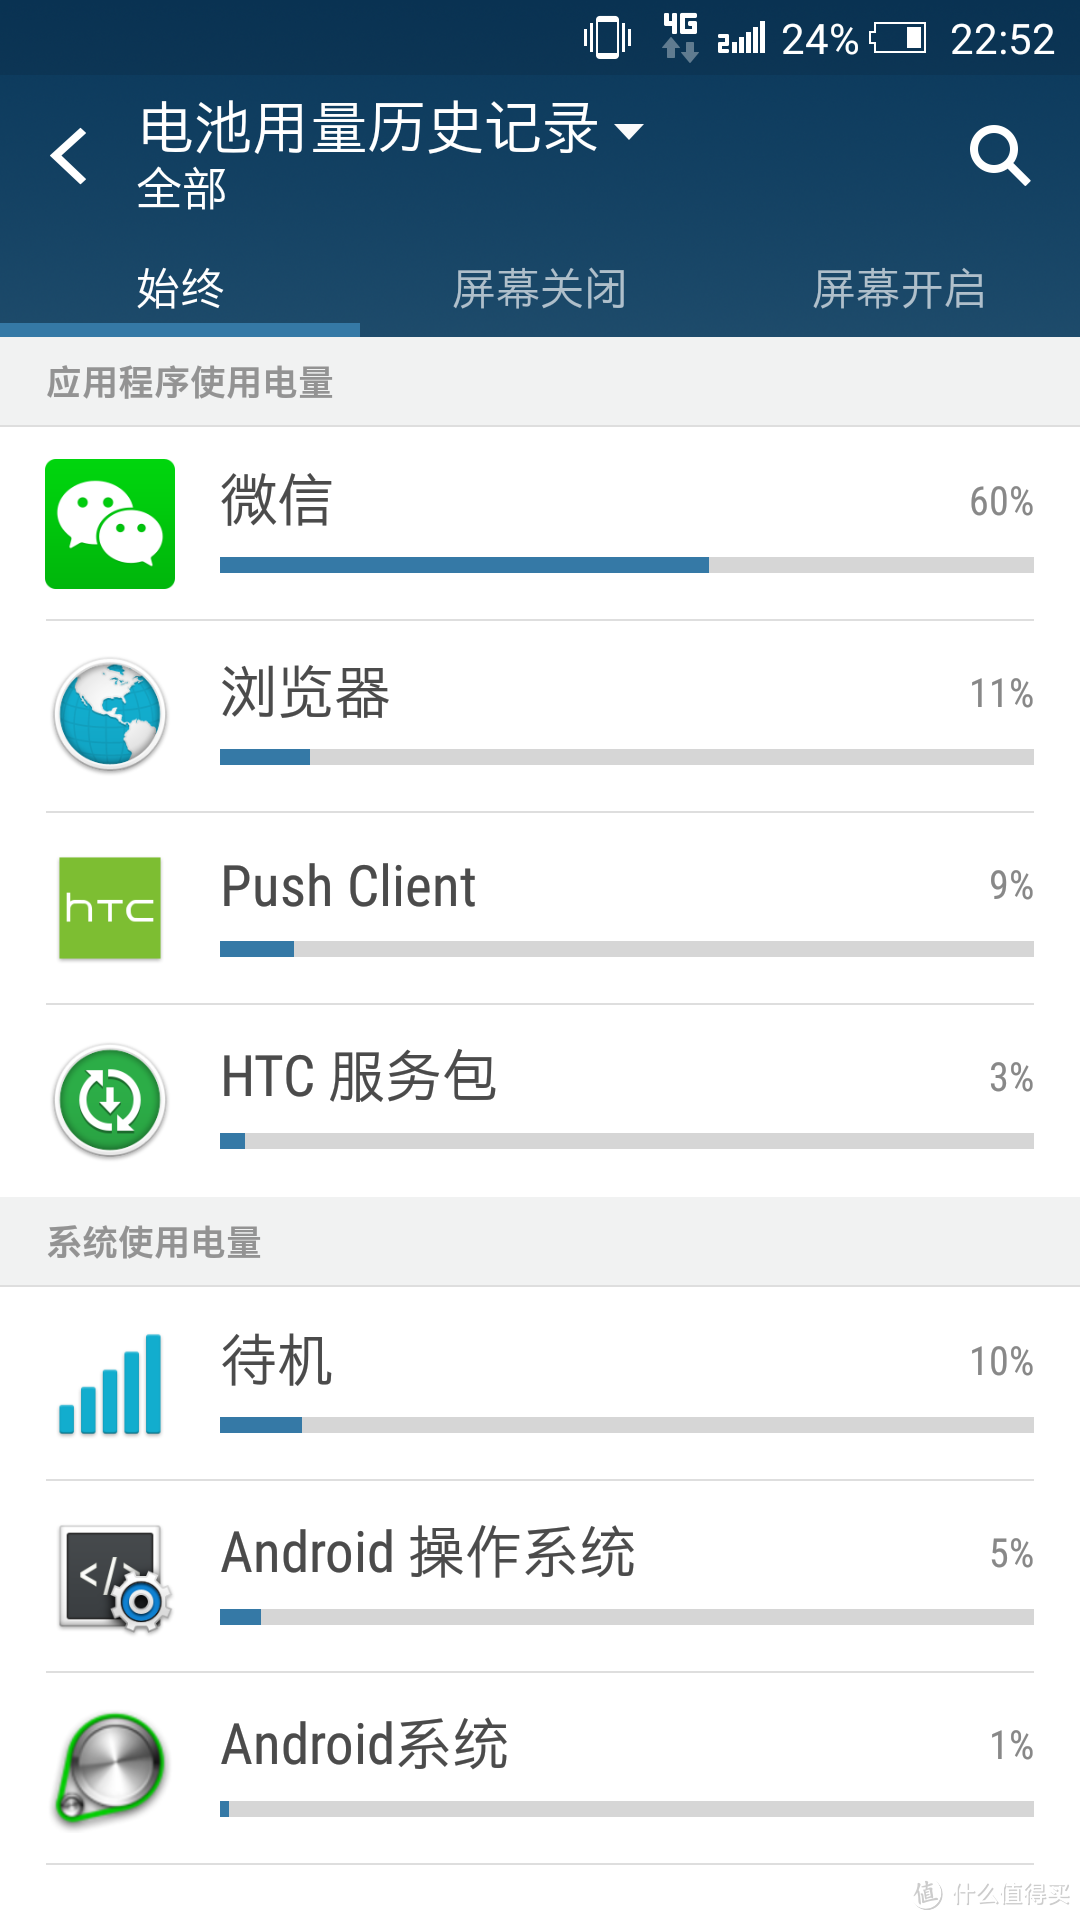 All in One, 一部靠谱的手机---HTC ONE X9智能手机众测报告